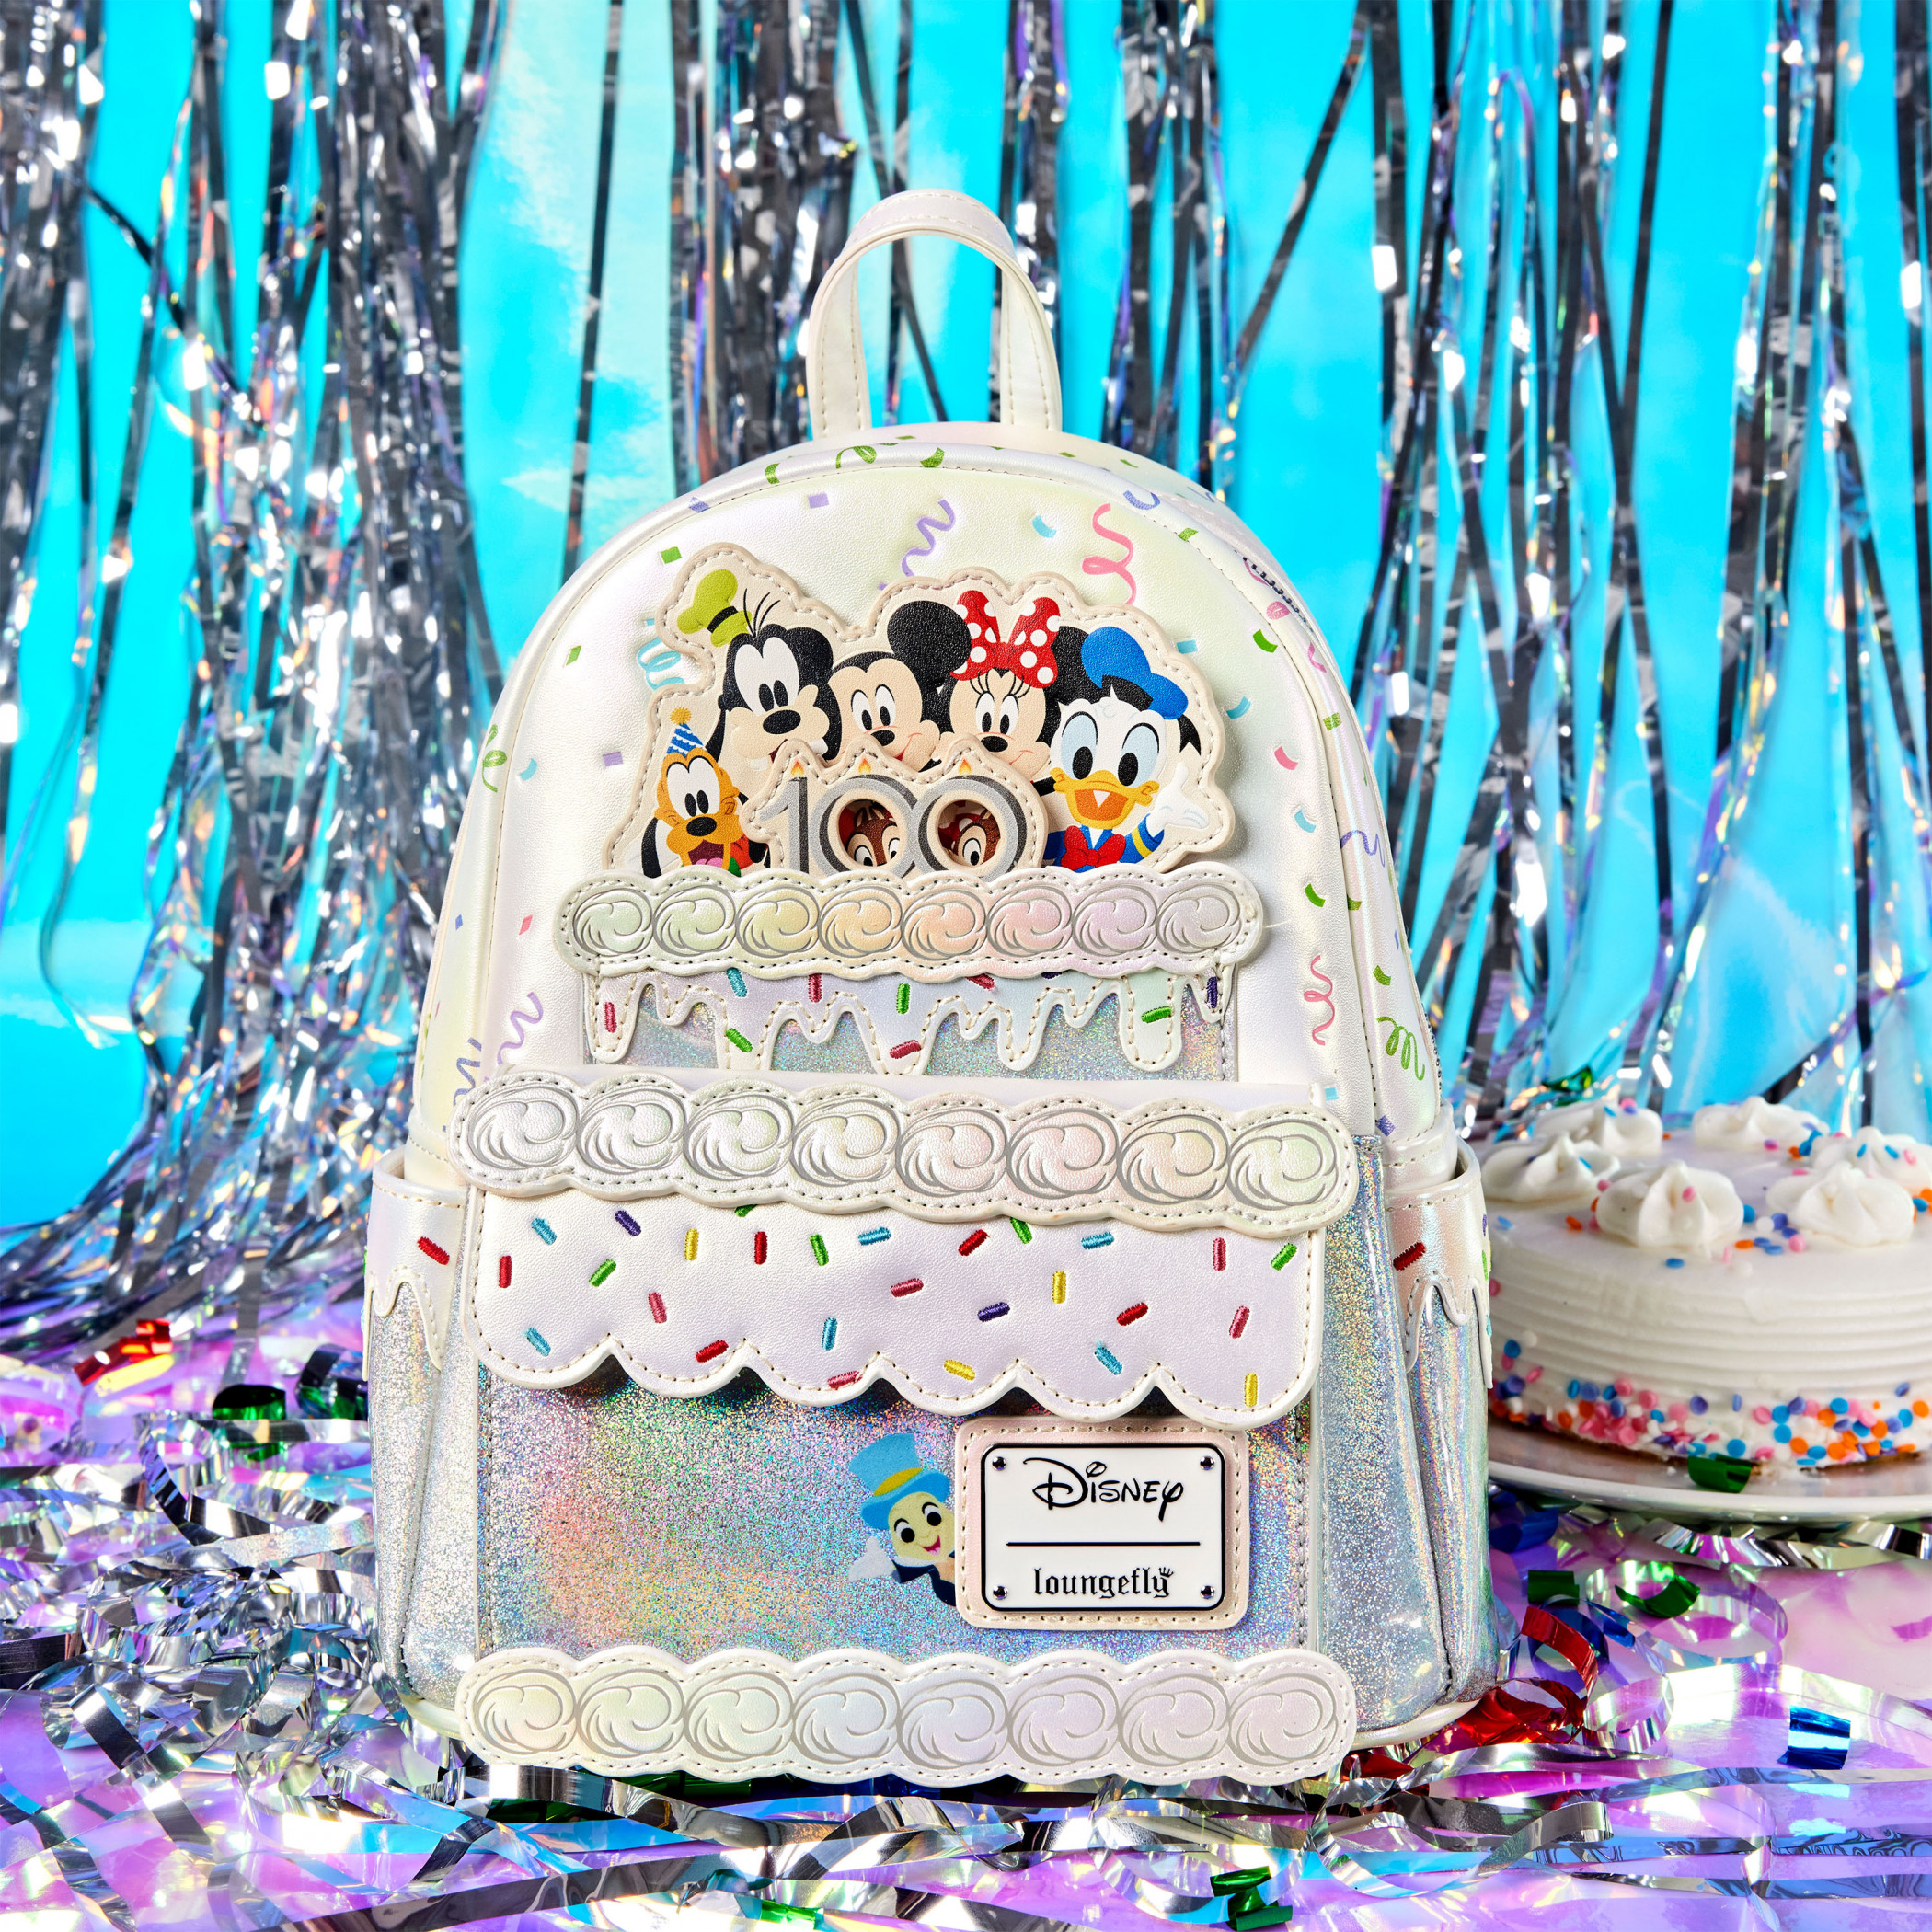 Disney 100 Years Celebration Cake Mini Backpack by Loungefly